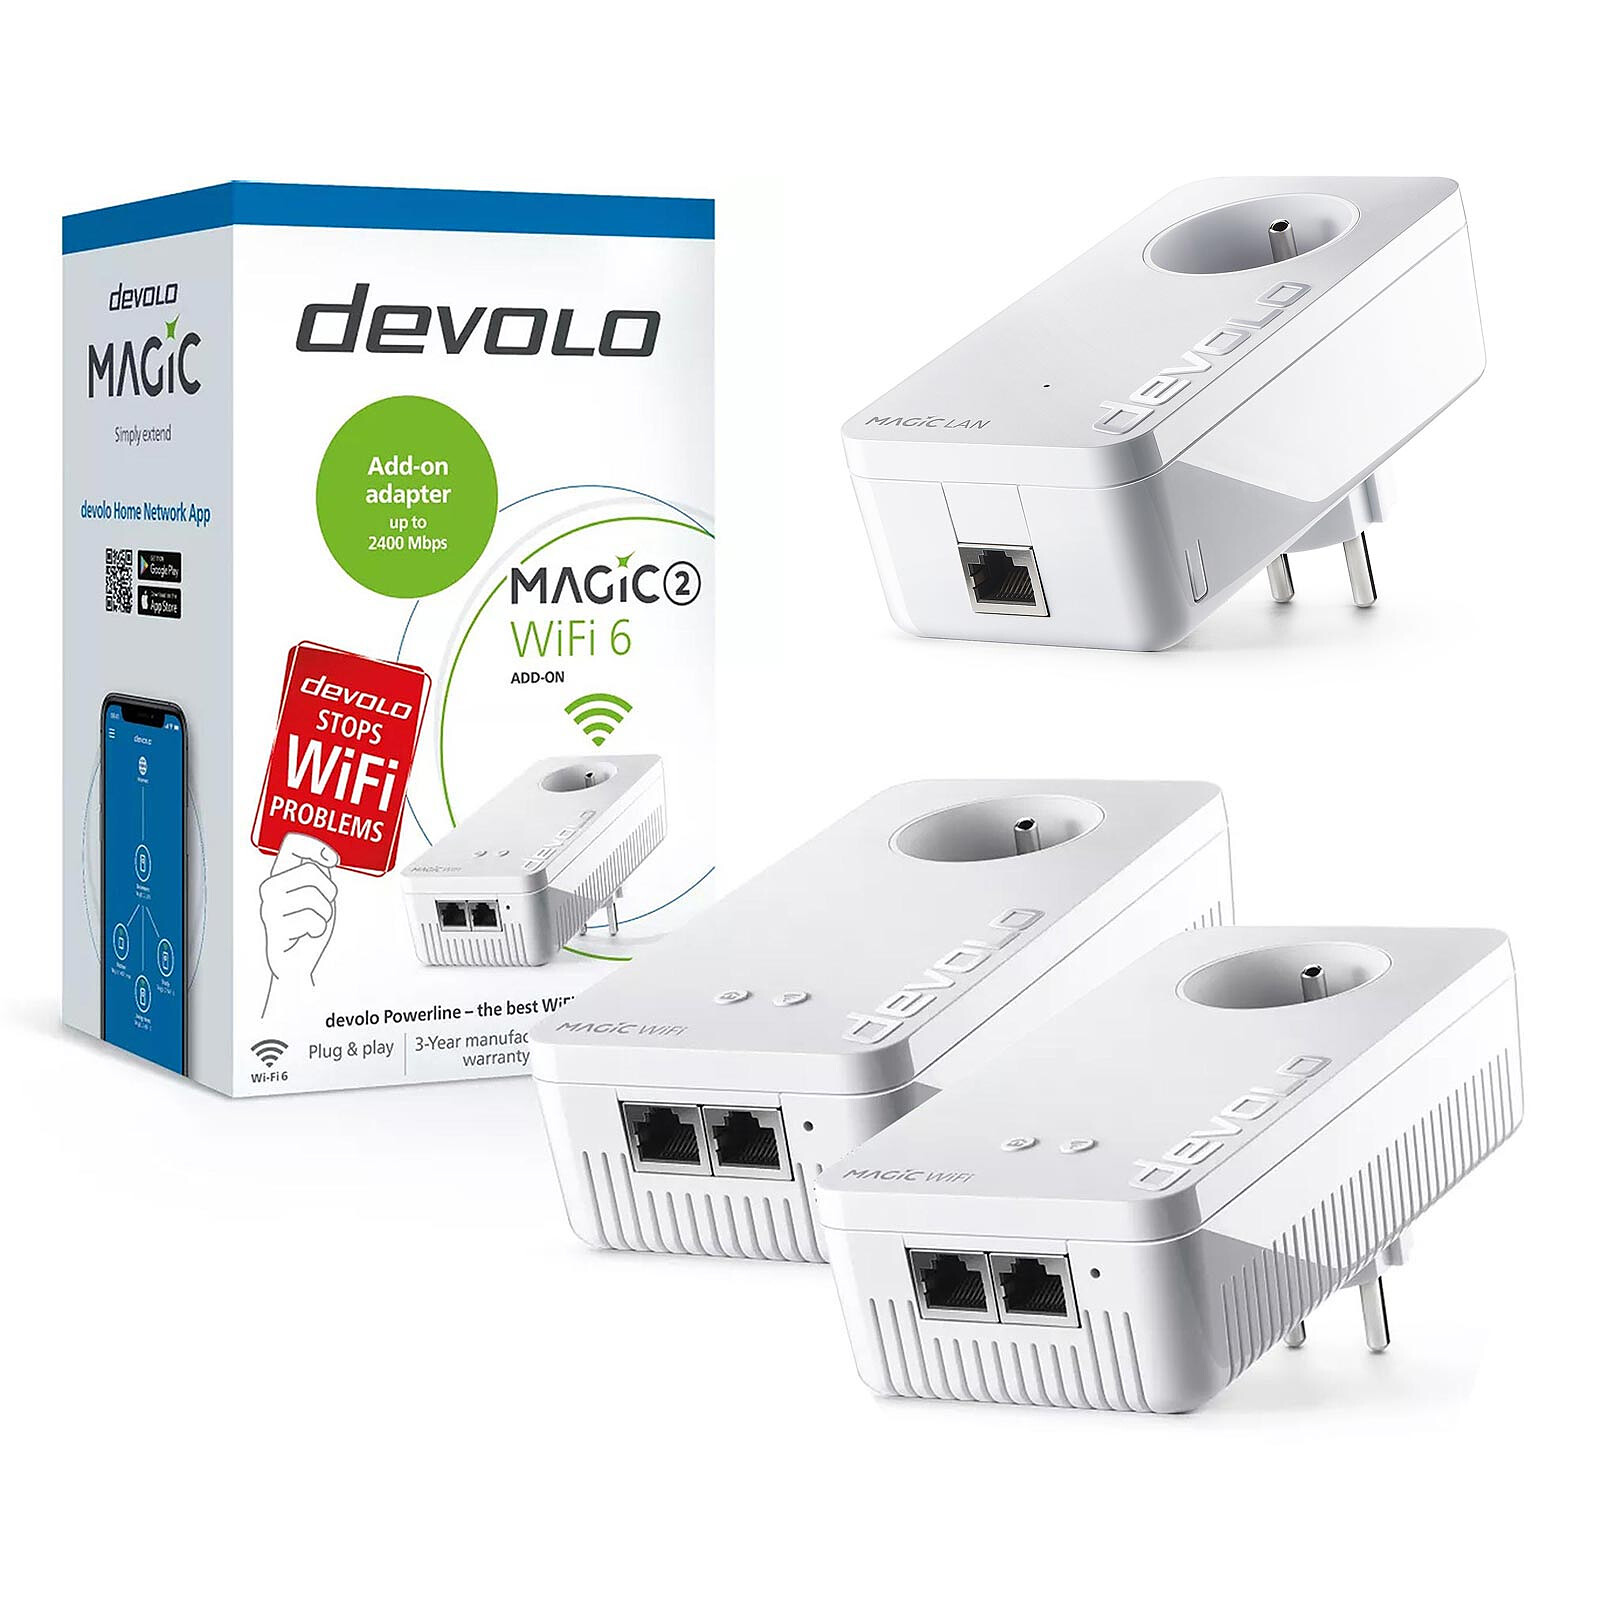 Adaptador PLC Devolo DLAN 550 WiFi Started Kit